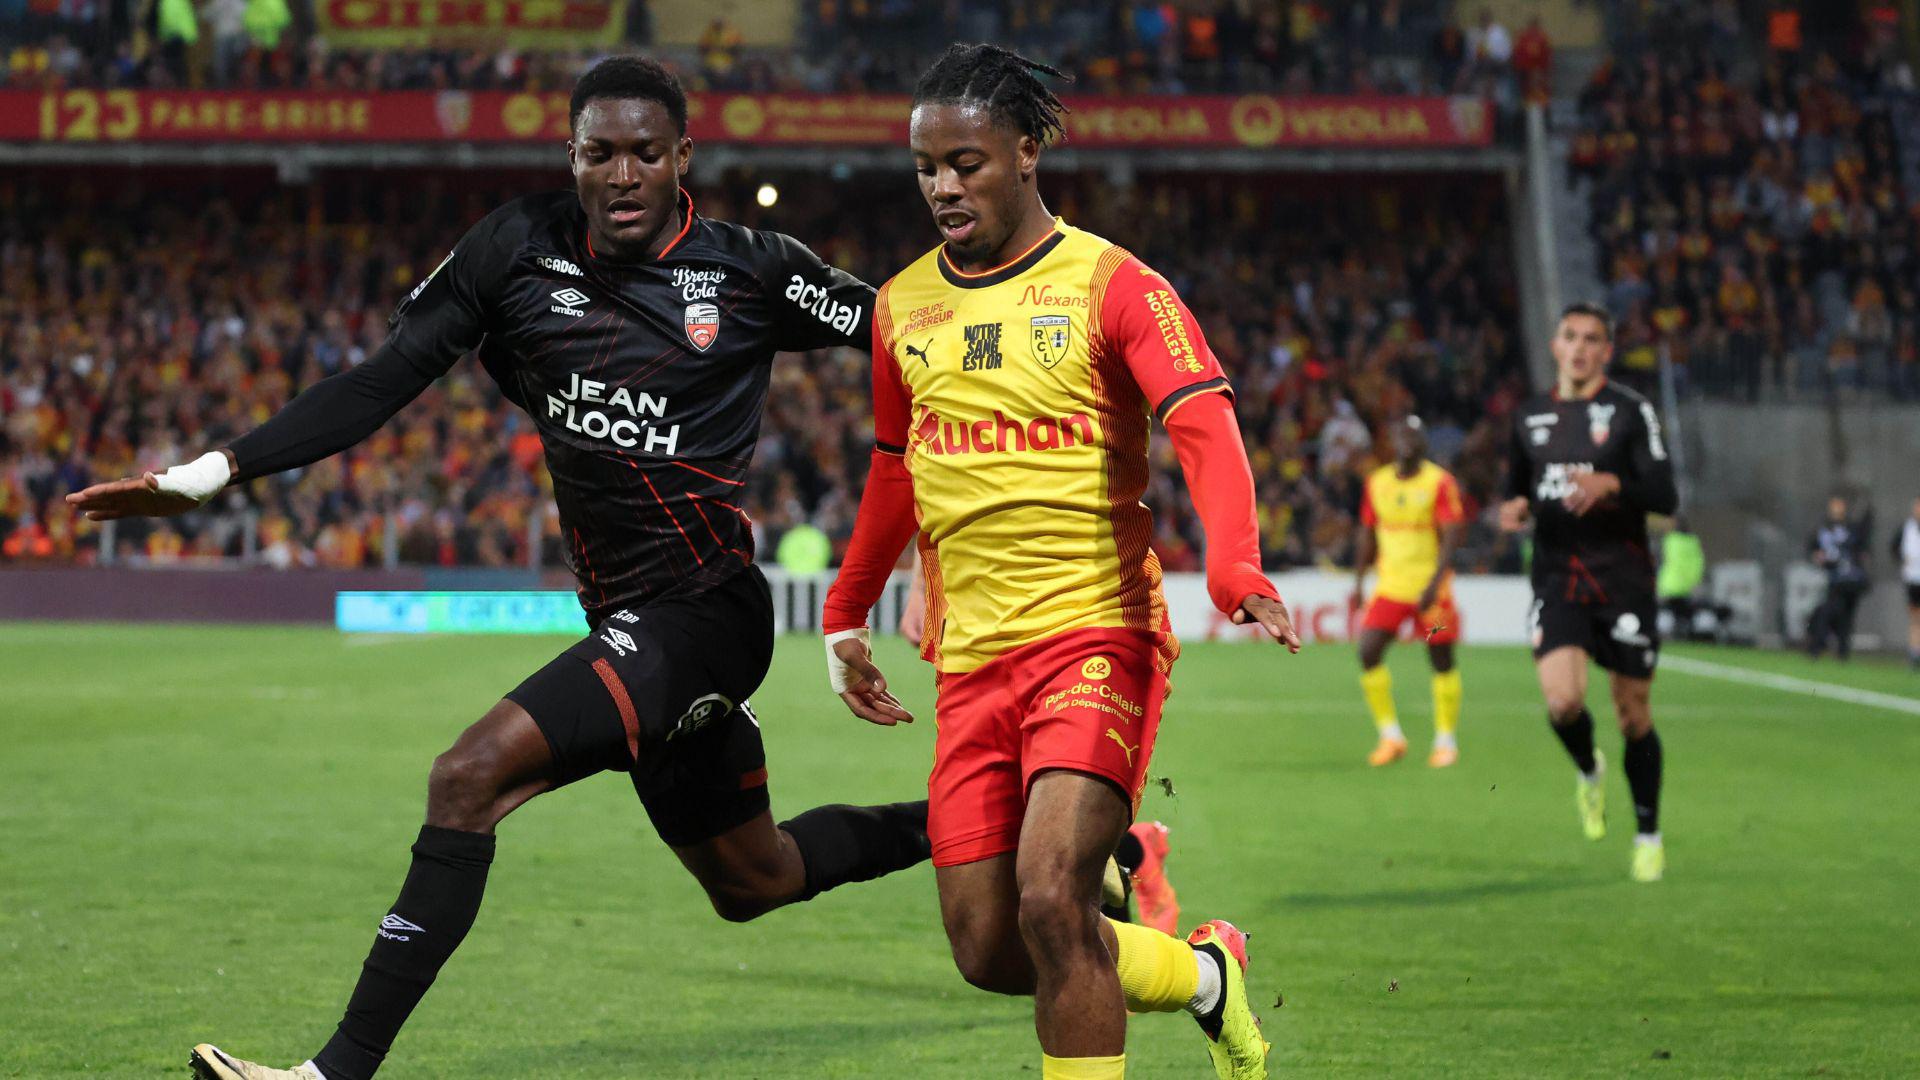 VIDEO | Ligue 1 Highlights: Lens vs Lorient